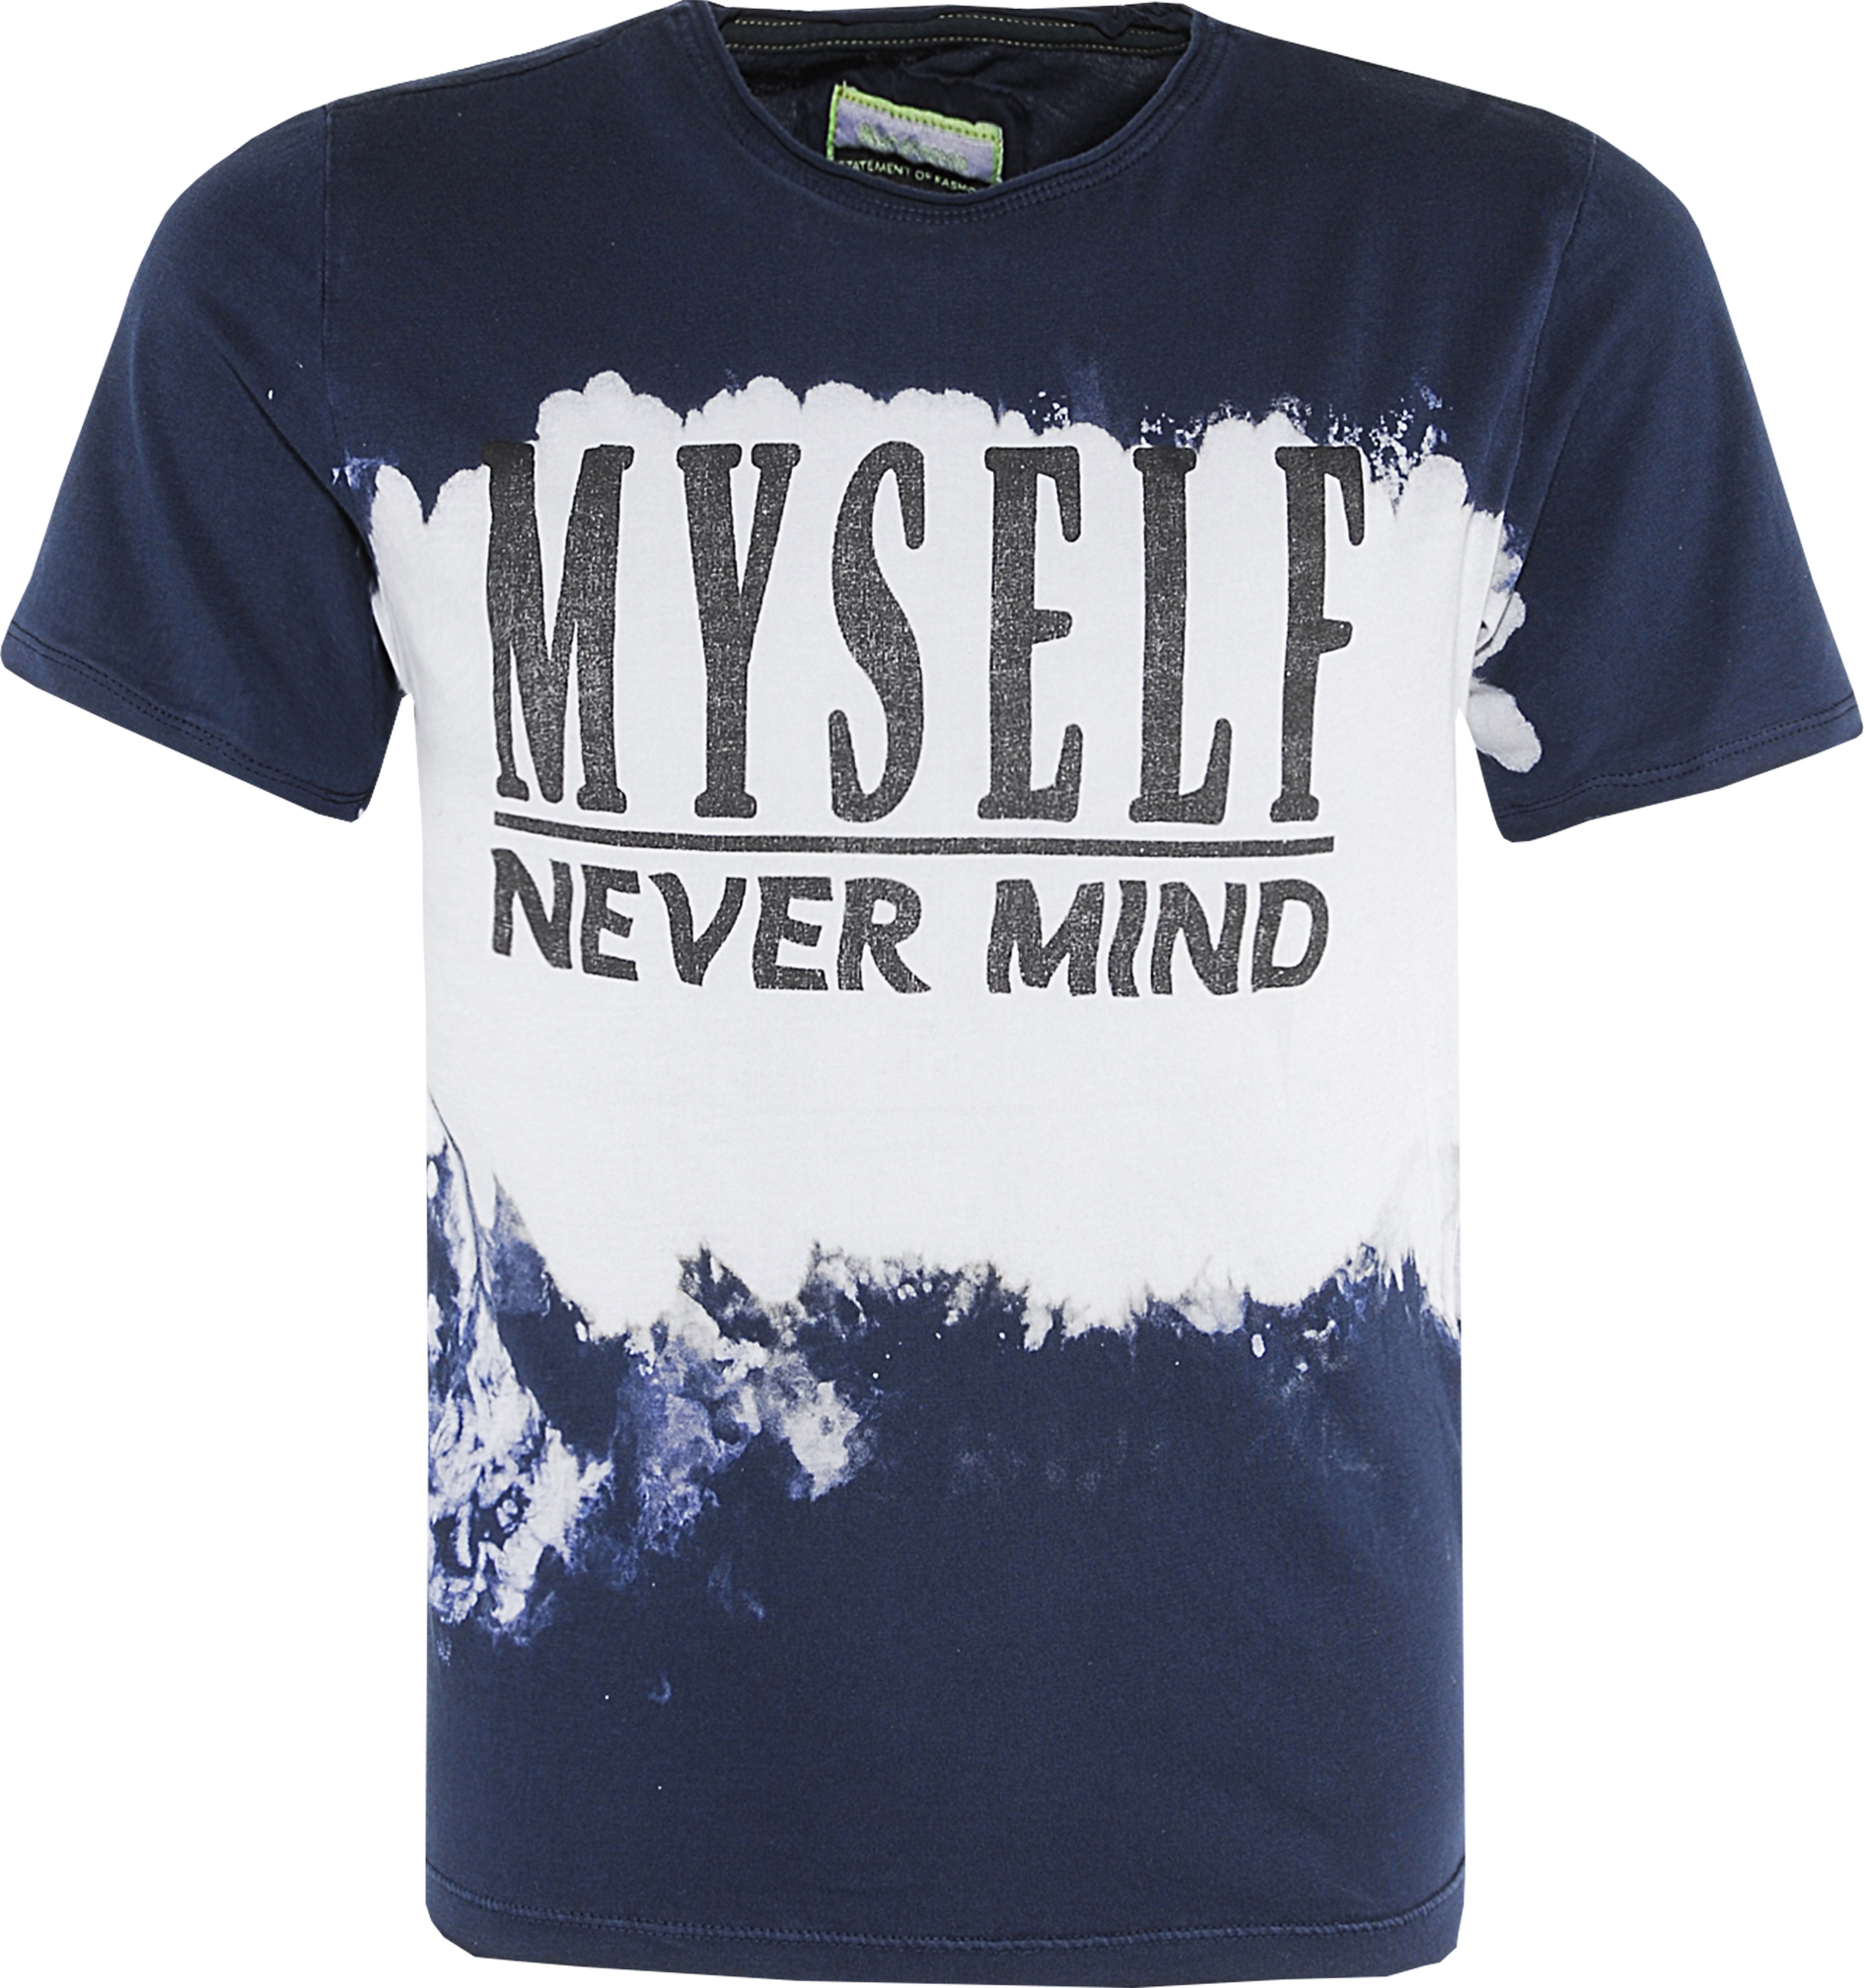 6068-Boys T-Shirt -Never Mind